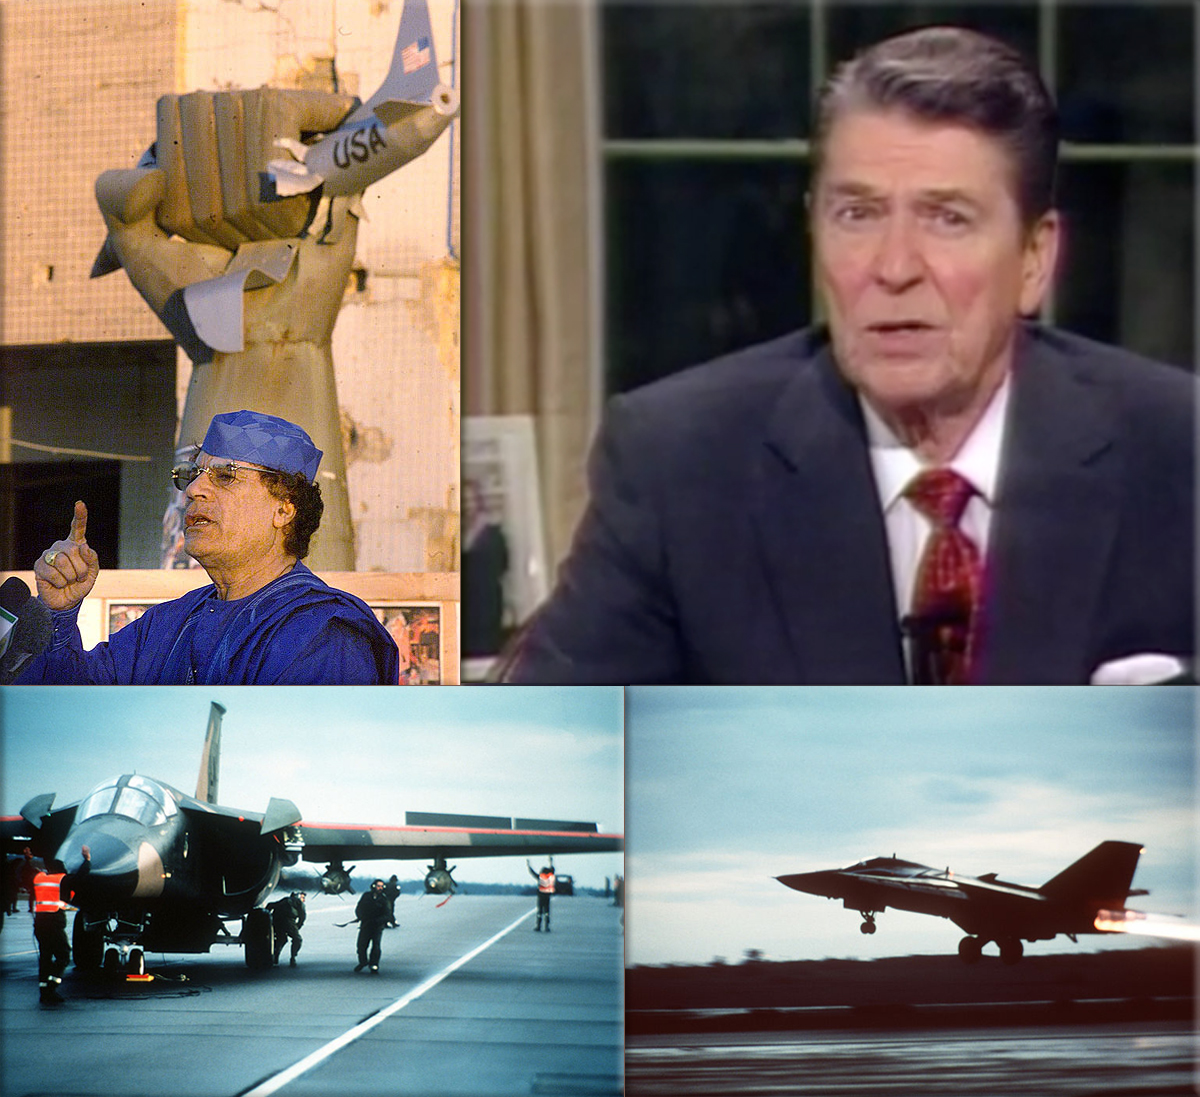 In retaliation for the April 5 bombing in West Berlin that killed two U.S. servicemen, U.S. president Ronald Reagan orders major bombing raids against Libya, killing 60 people